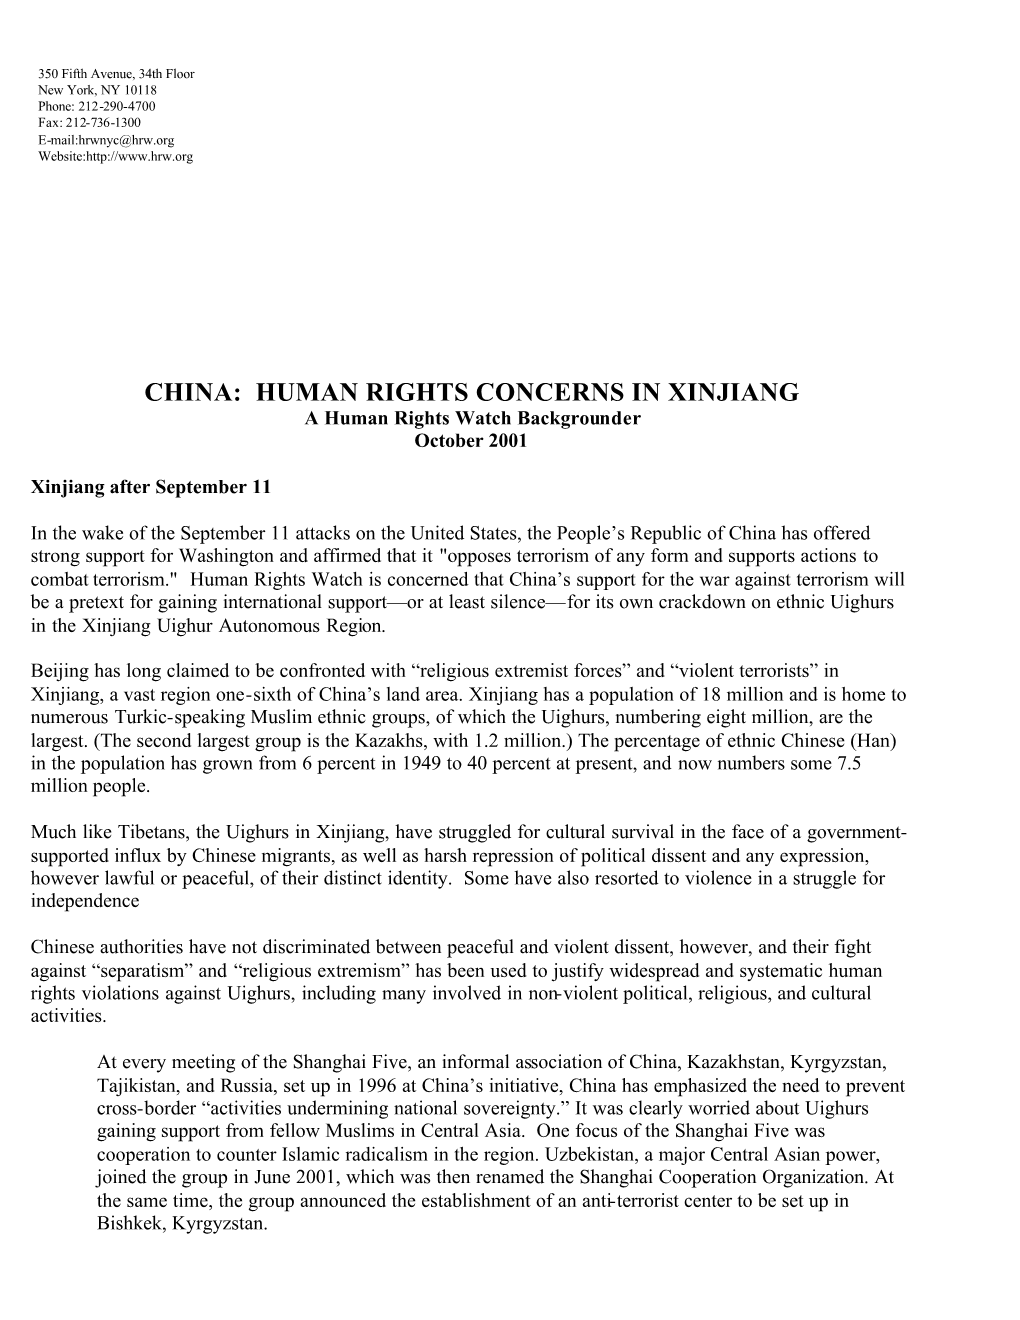 CHINA: HUMAN RIGHTS CONCERNS in XINJIANG a Human Rights Watch Backgrounder October 2001